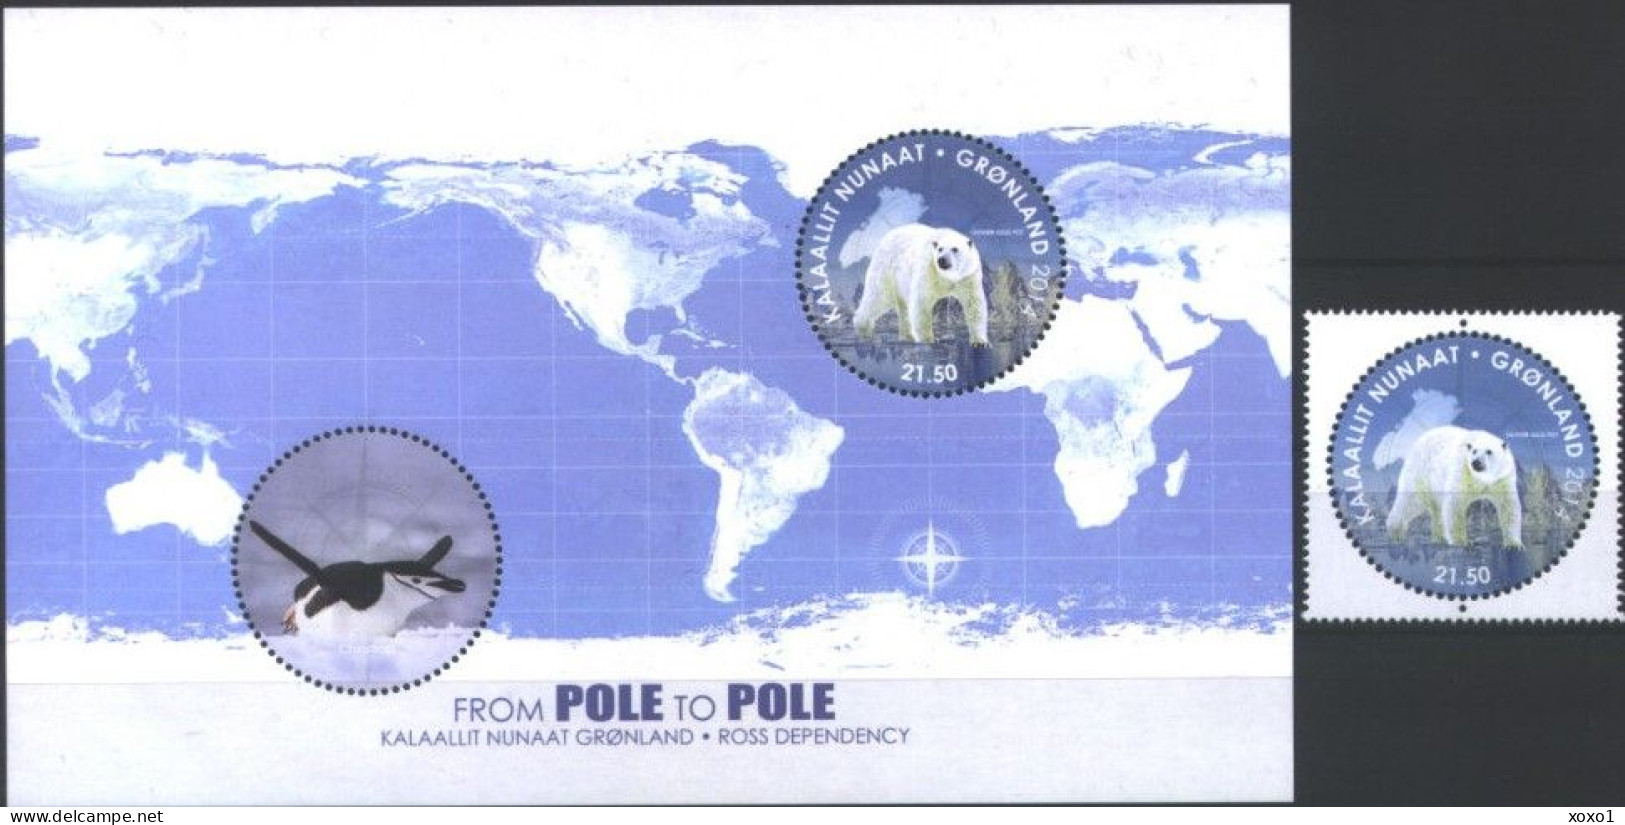 Greenland 2014 MiNr. 680 (Block 70) Dänemark Grönland Ross Antarctica Pole Bears BIRDS Penguins 1v + S\sh MNH** 13.00 € - Faune Arctique